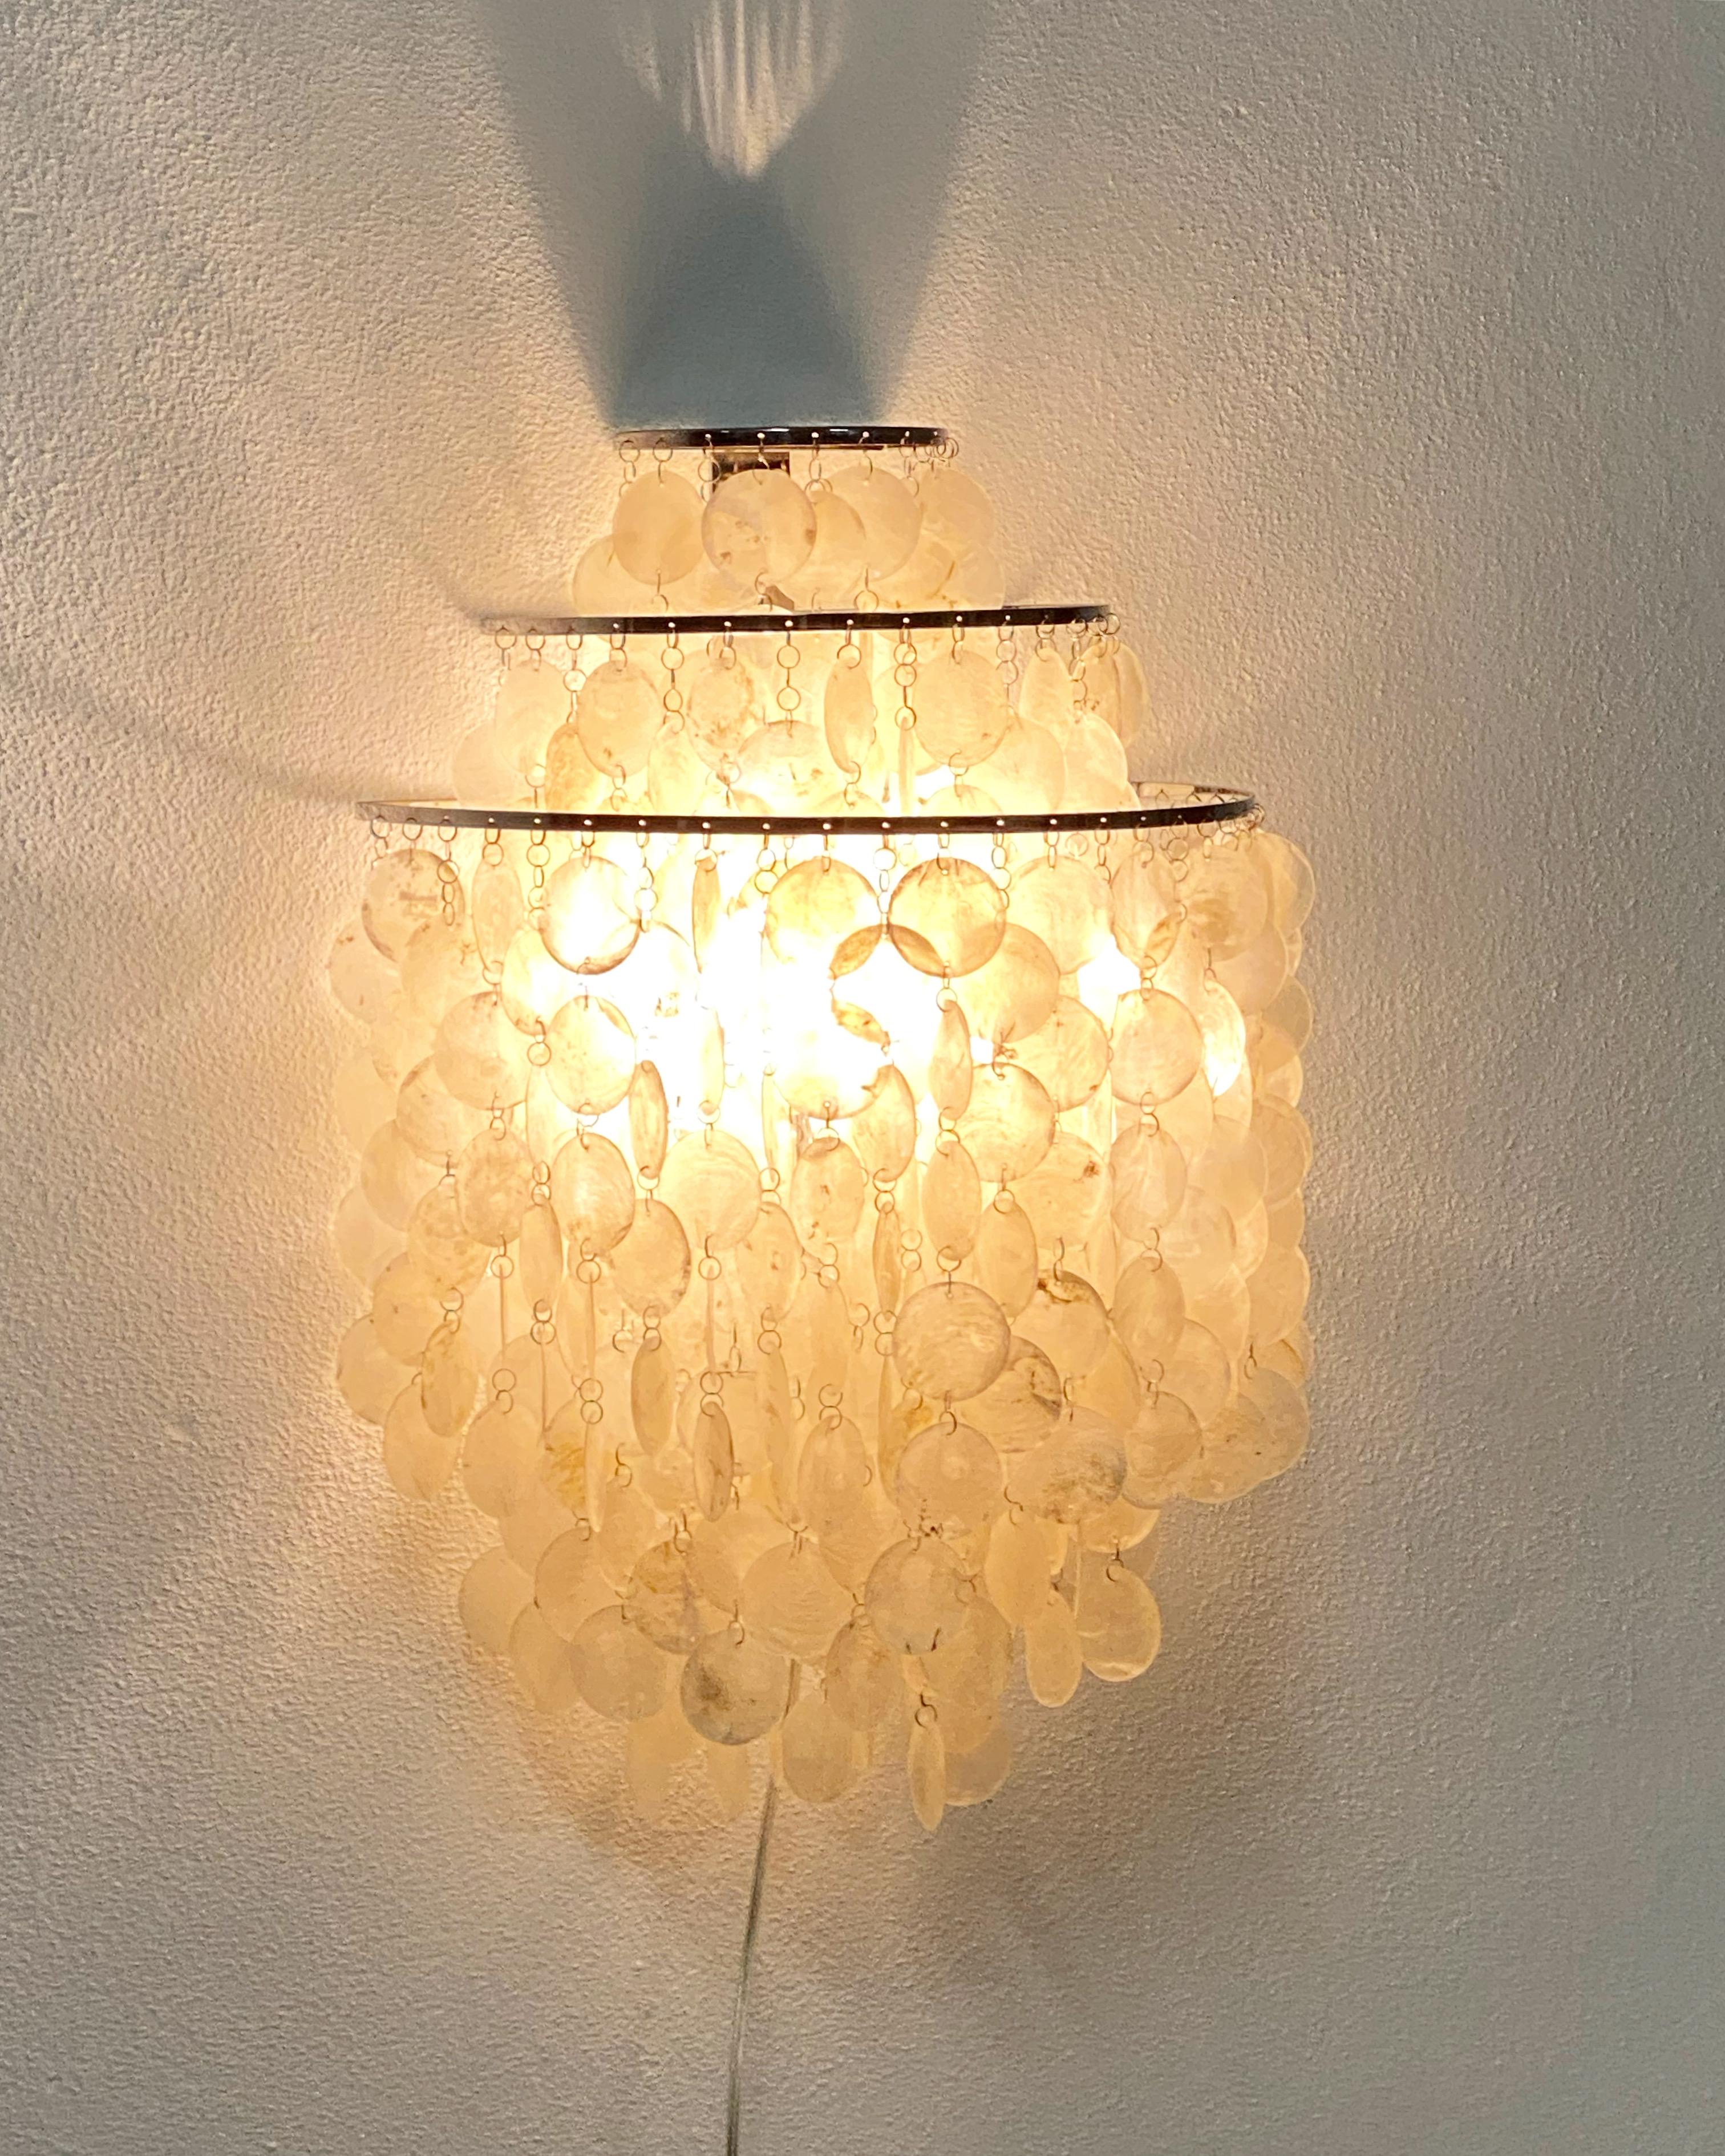 Original 1964 thin capiz shell chandelier designed by Verner Panton for Luber, Switzerland.